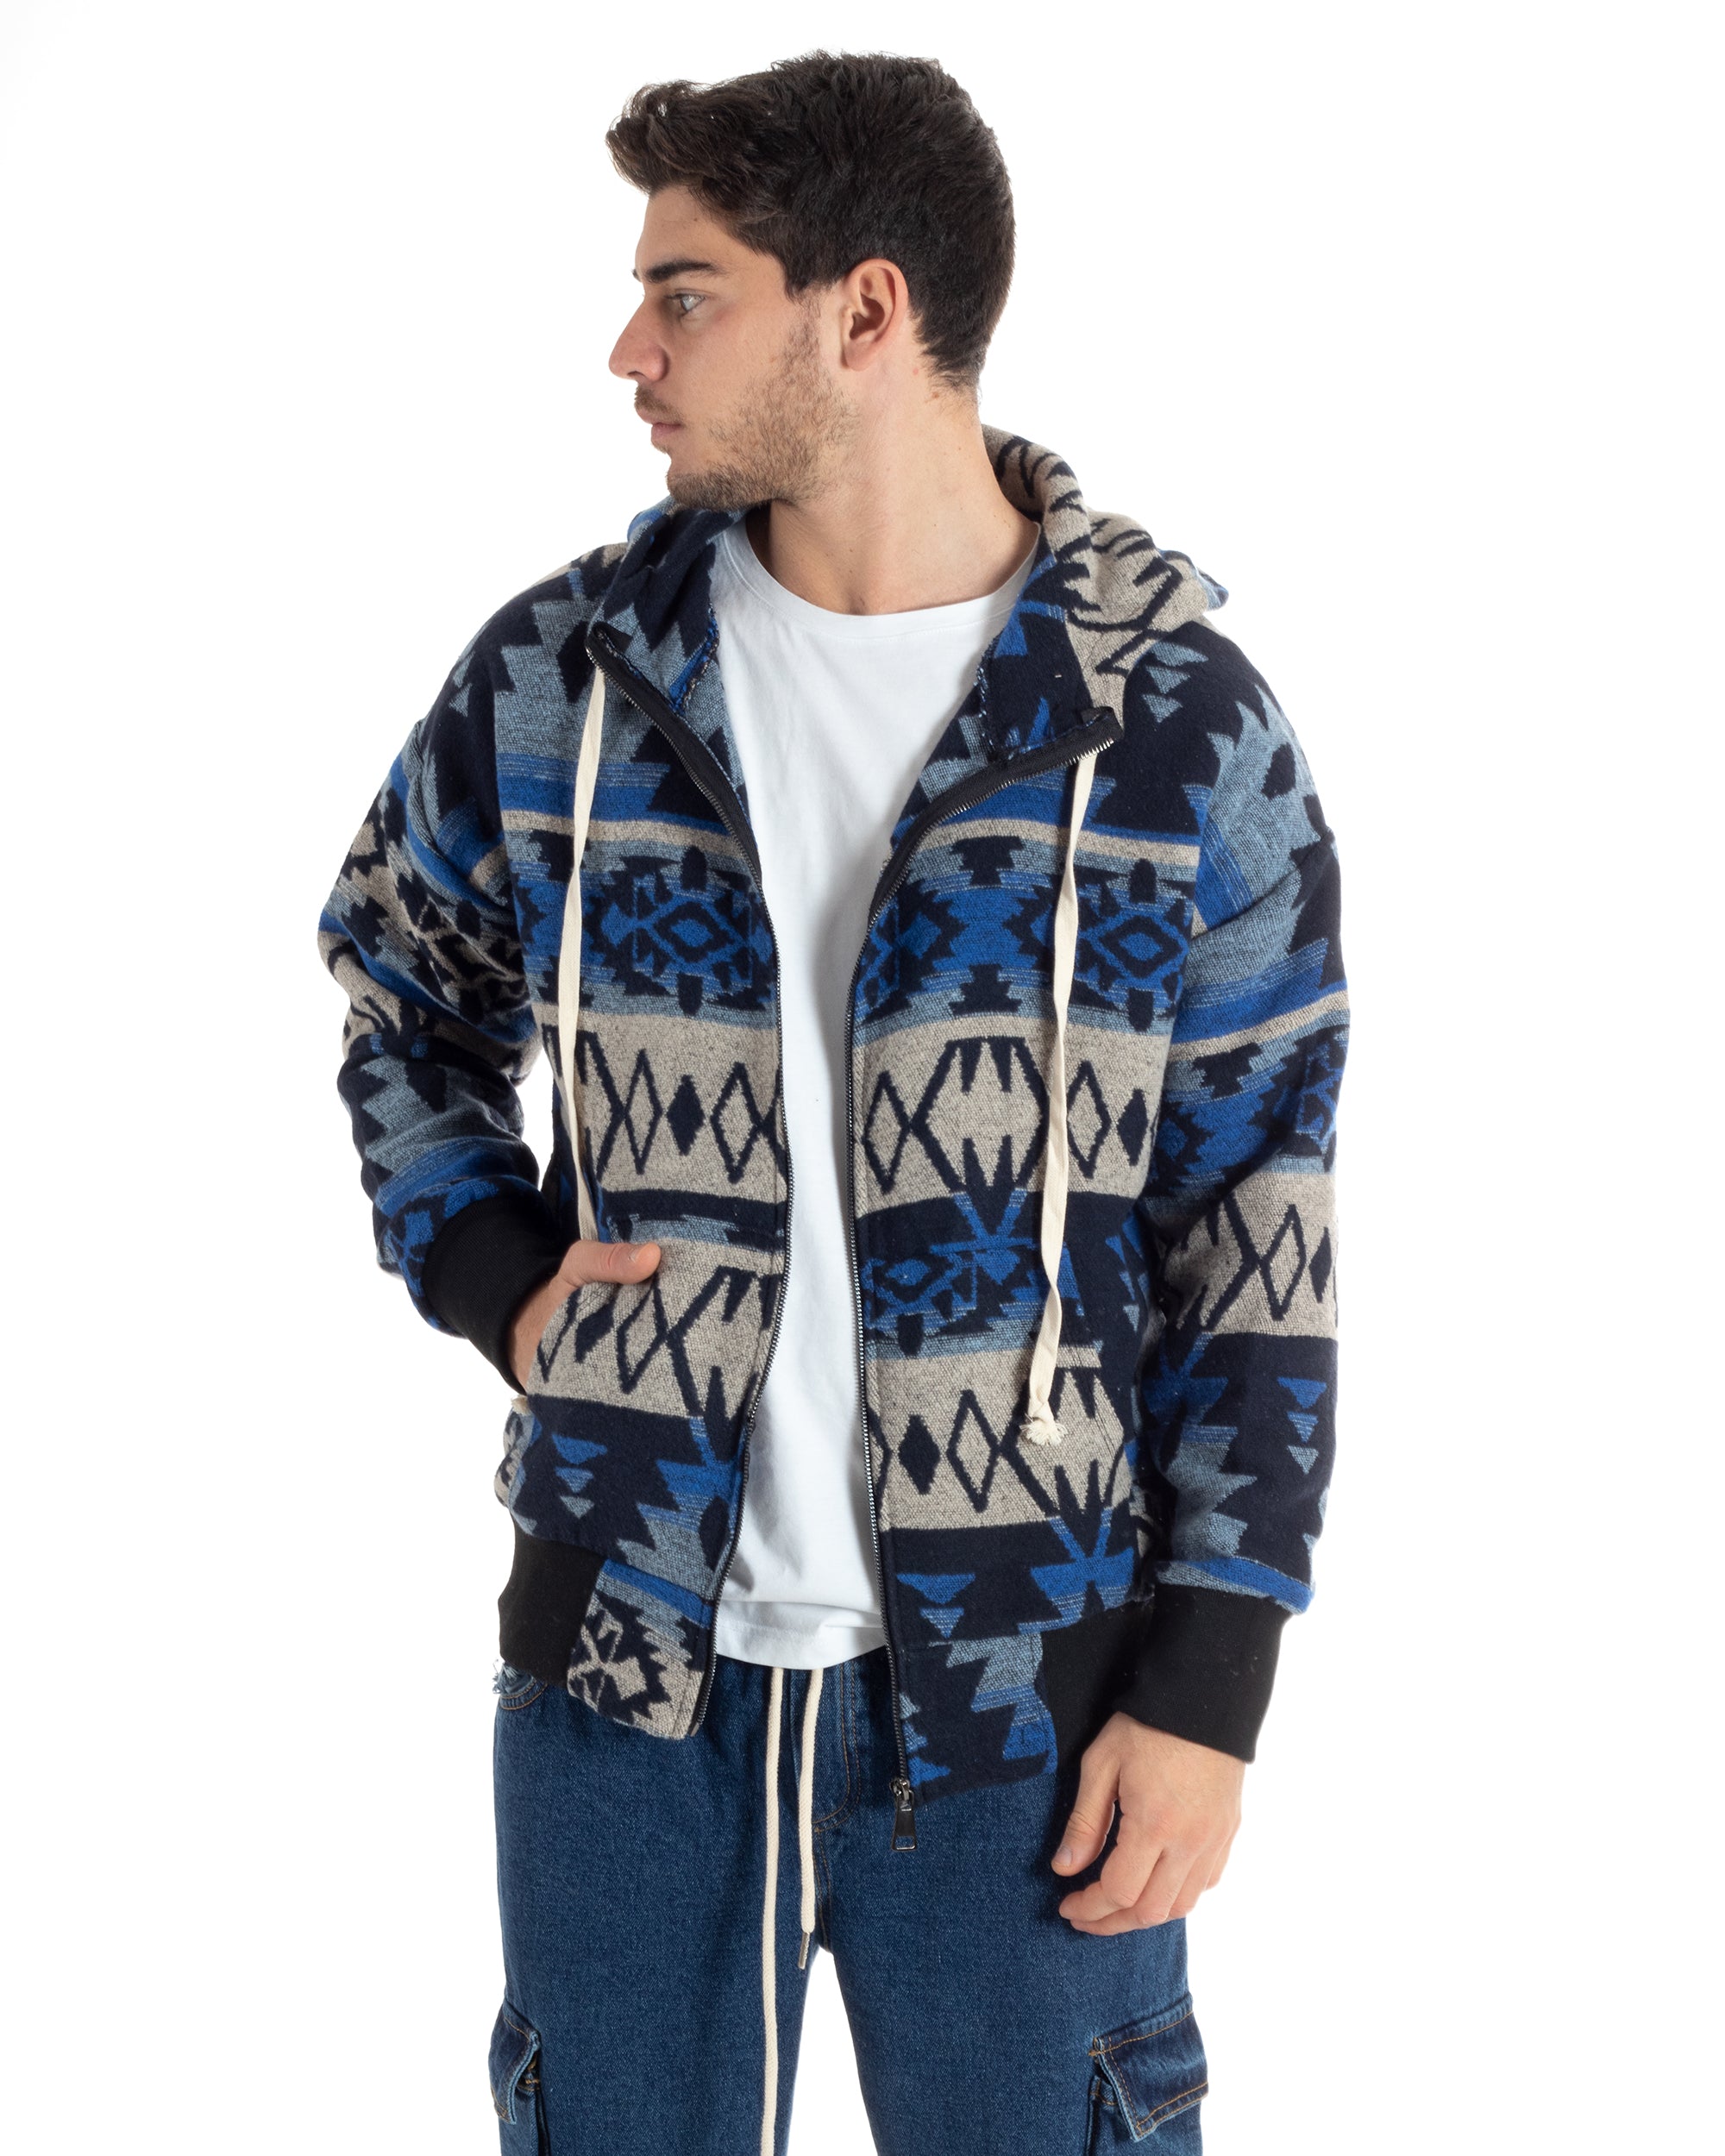 Coat Jacket Men Shirt Shirt With Hood Casual Blue Pattern GIOSAL-G2924A